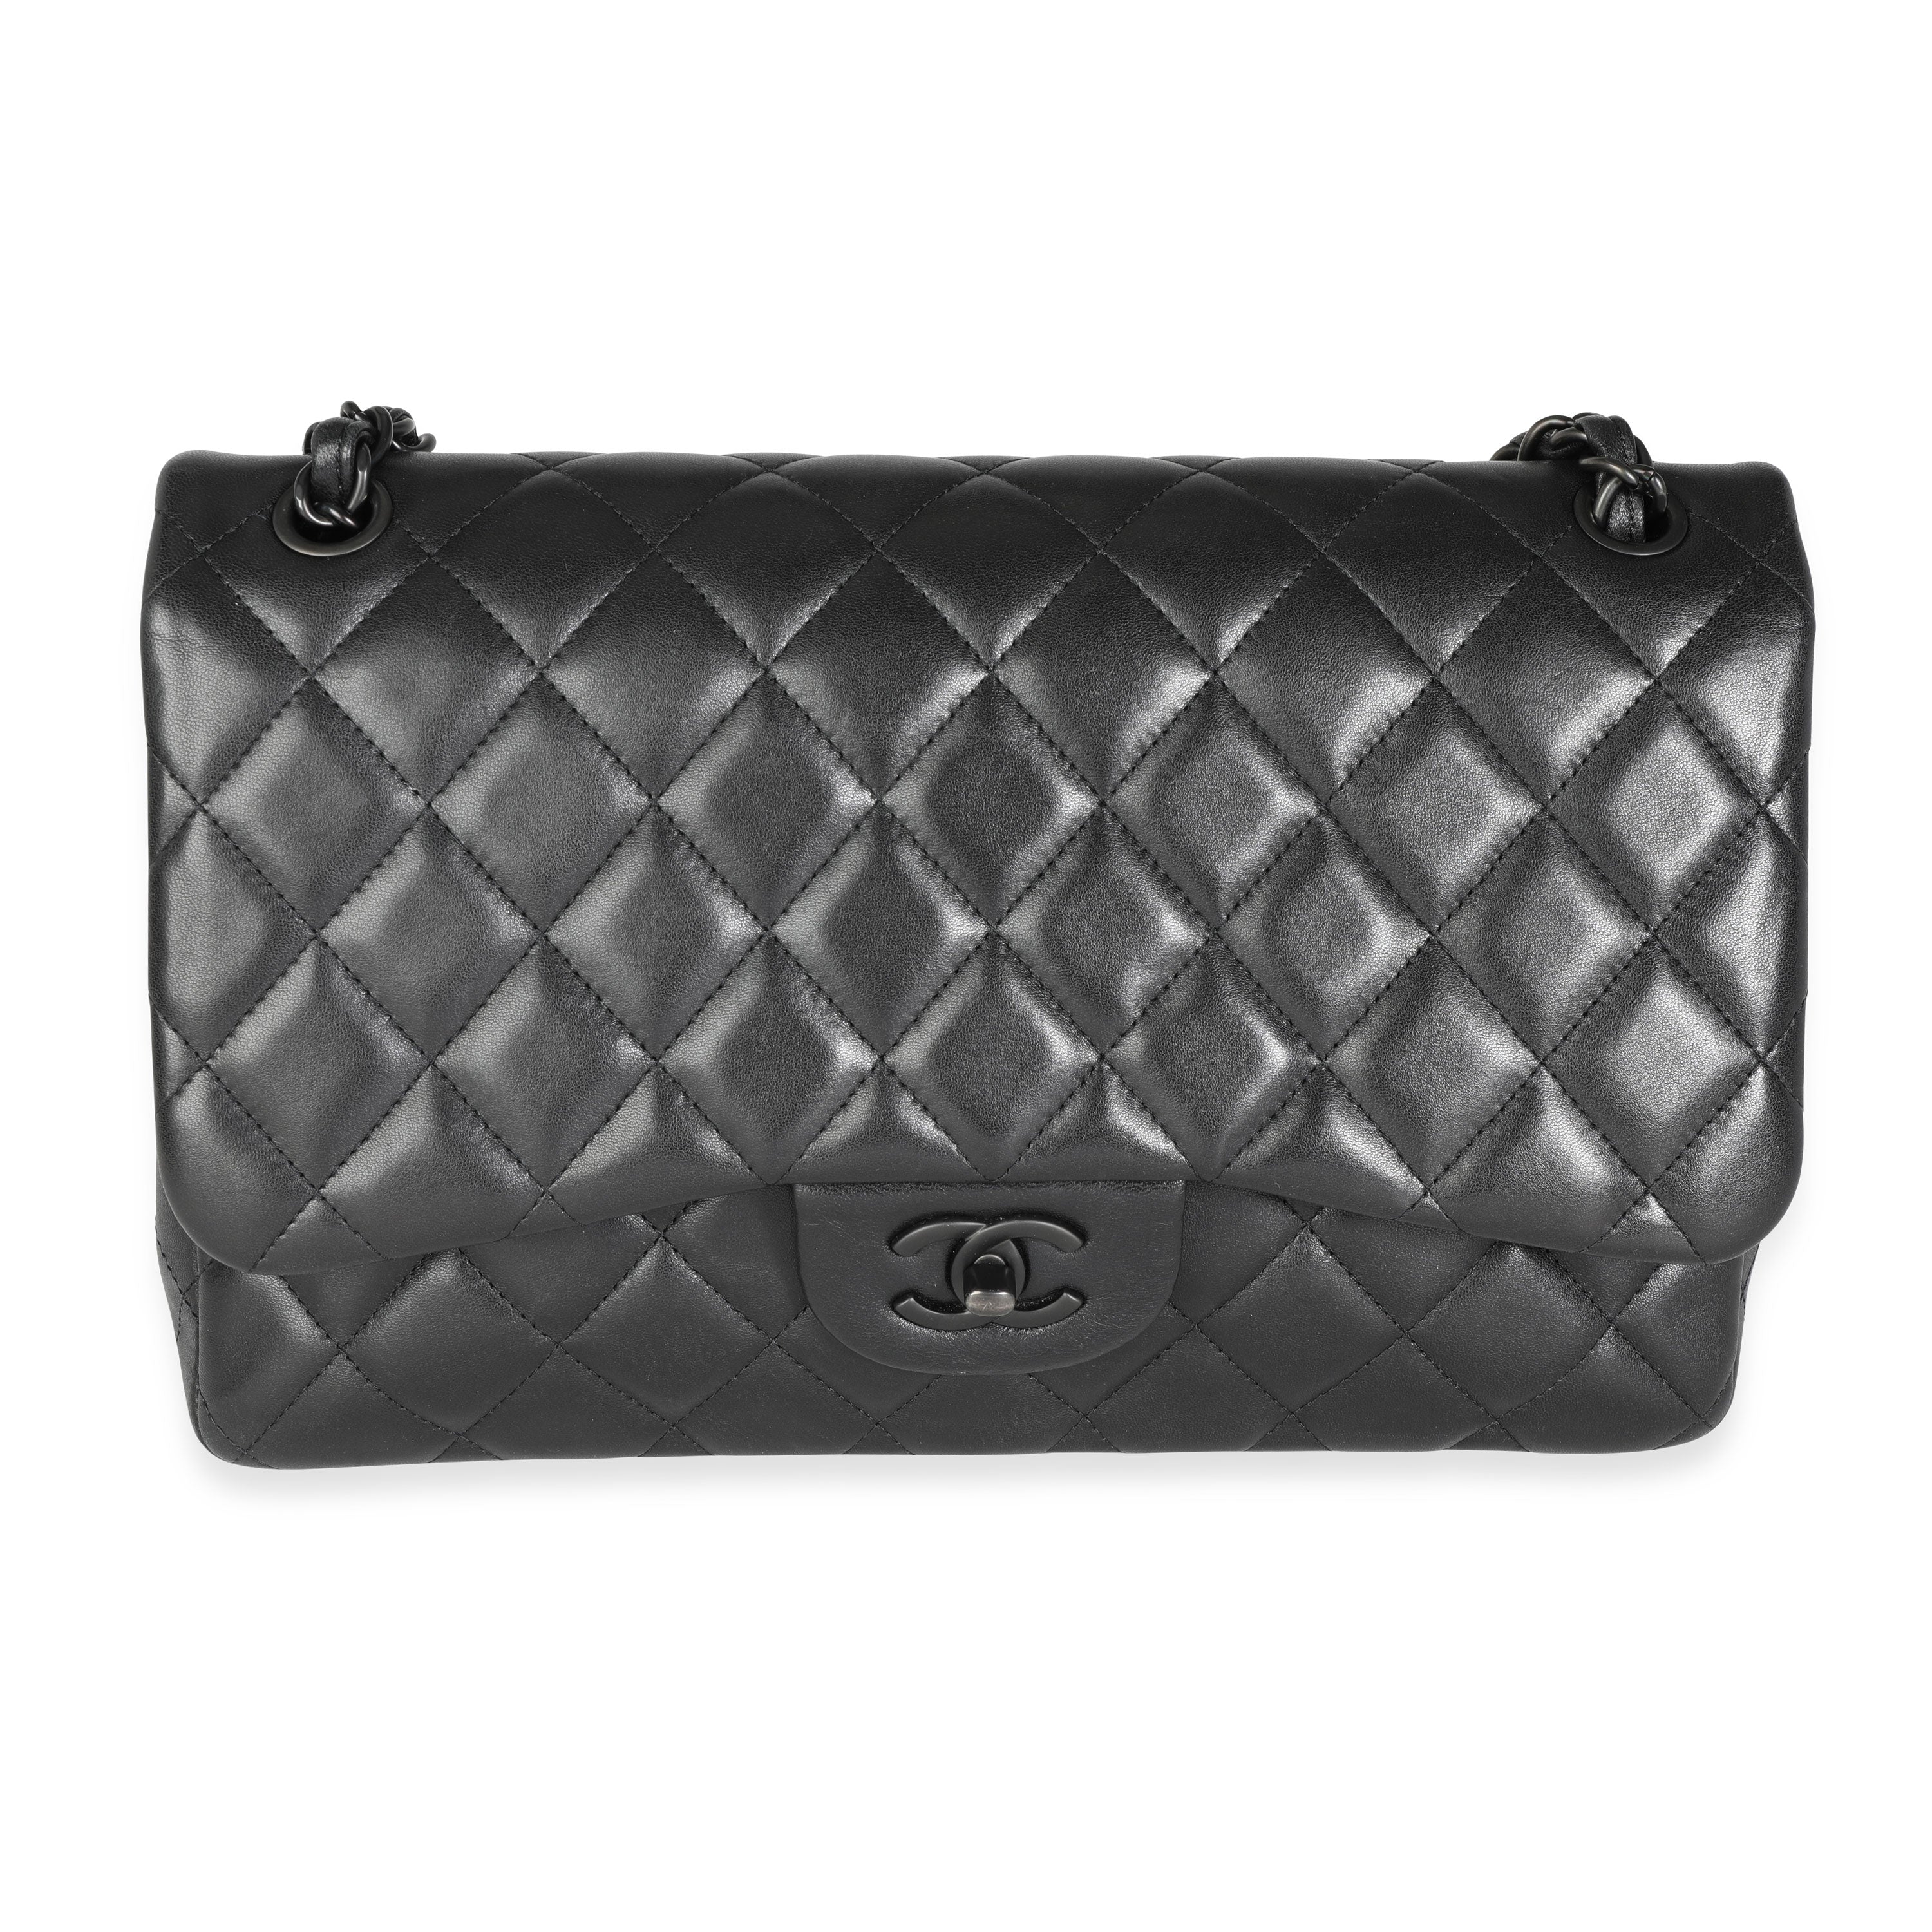 Chanel Black lambskin Jumbo classic flap bag